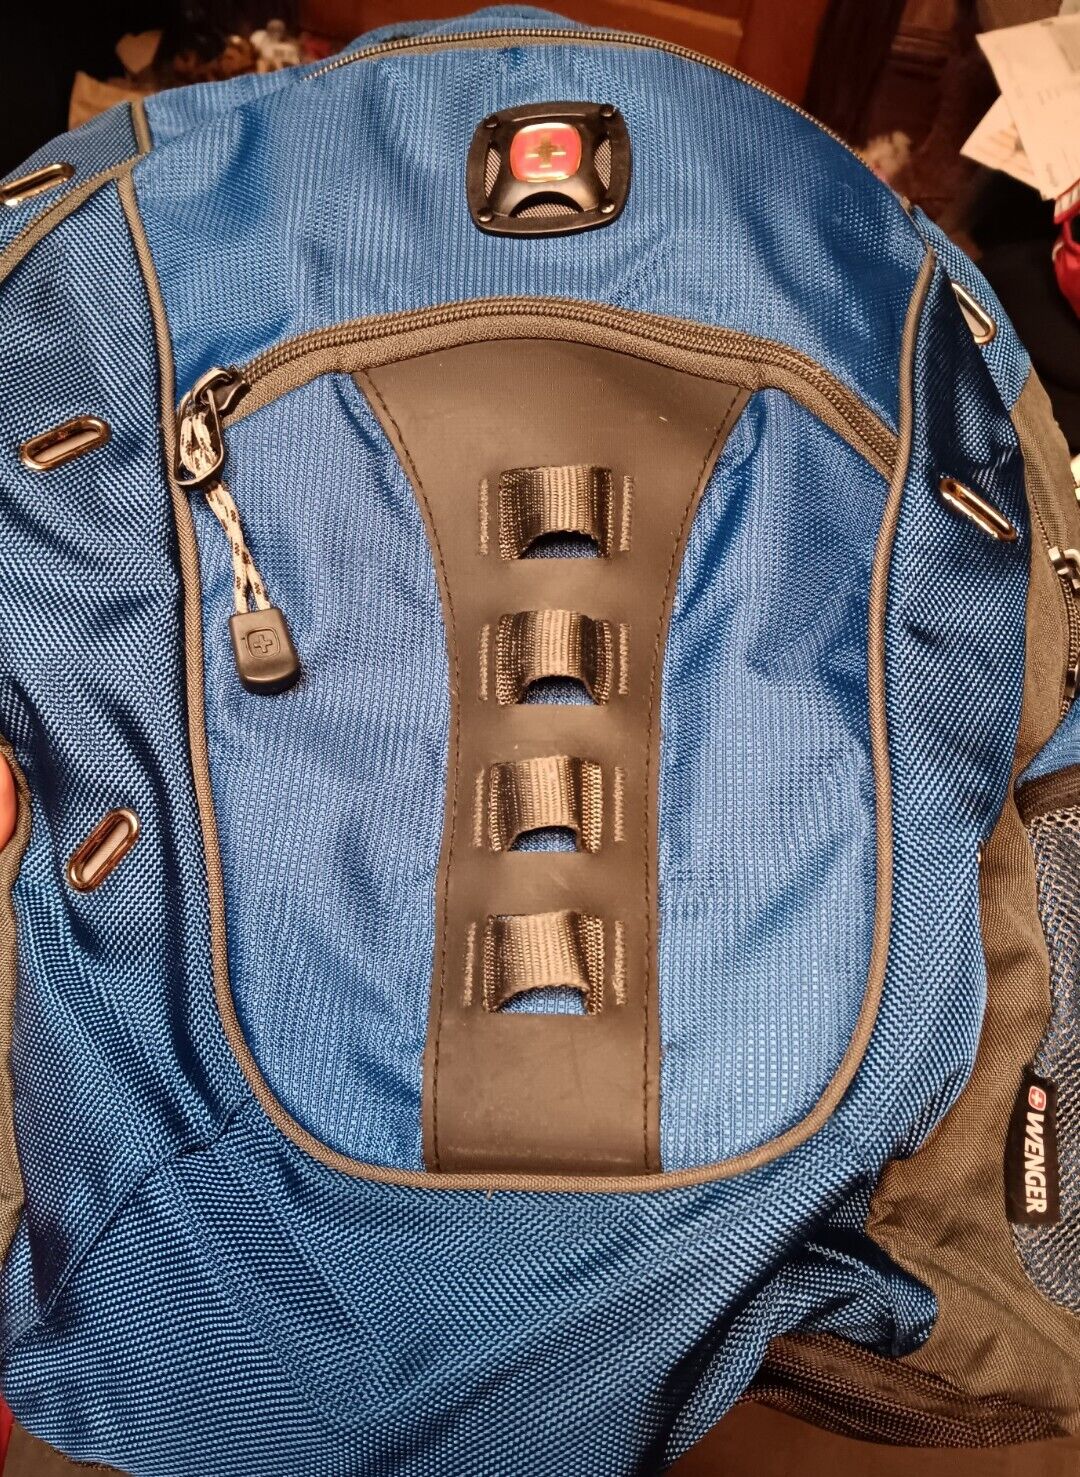 Wenger Swiss Gear 16” Laptop Tablet Backpack Black Blue Swiss Army Hiking